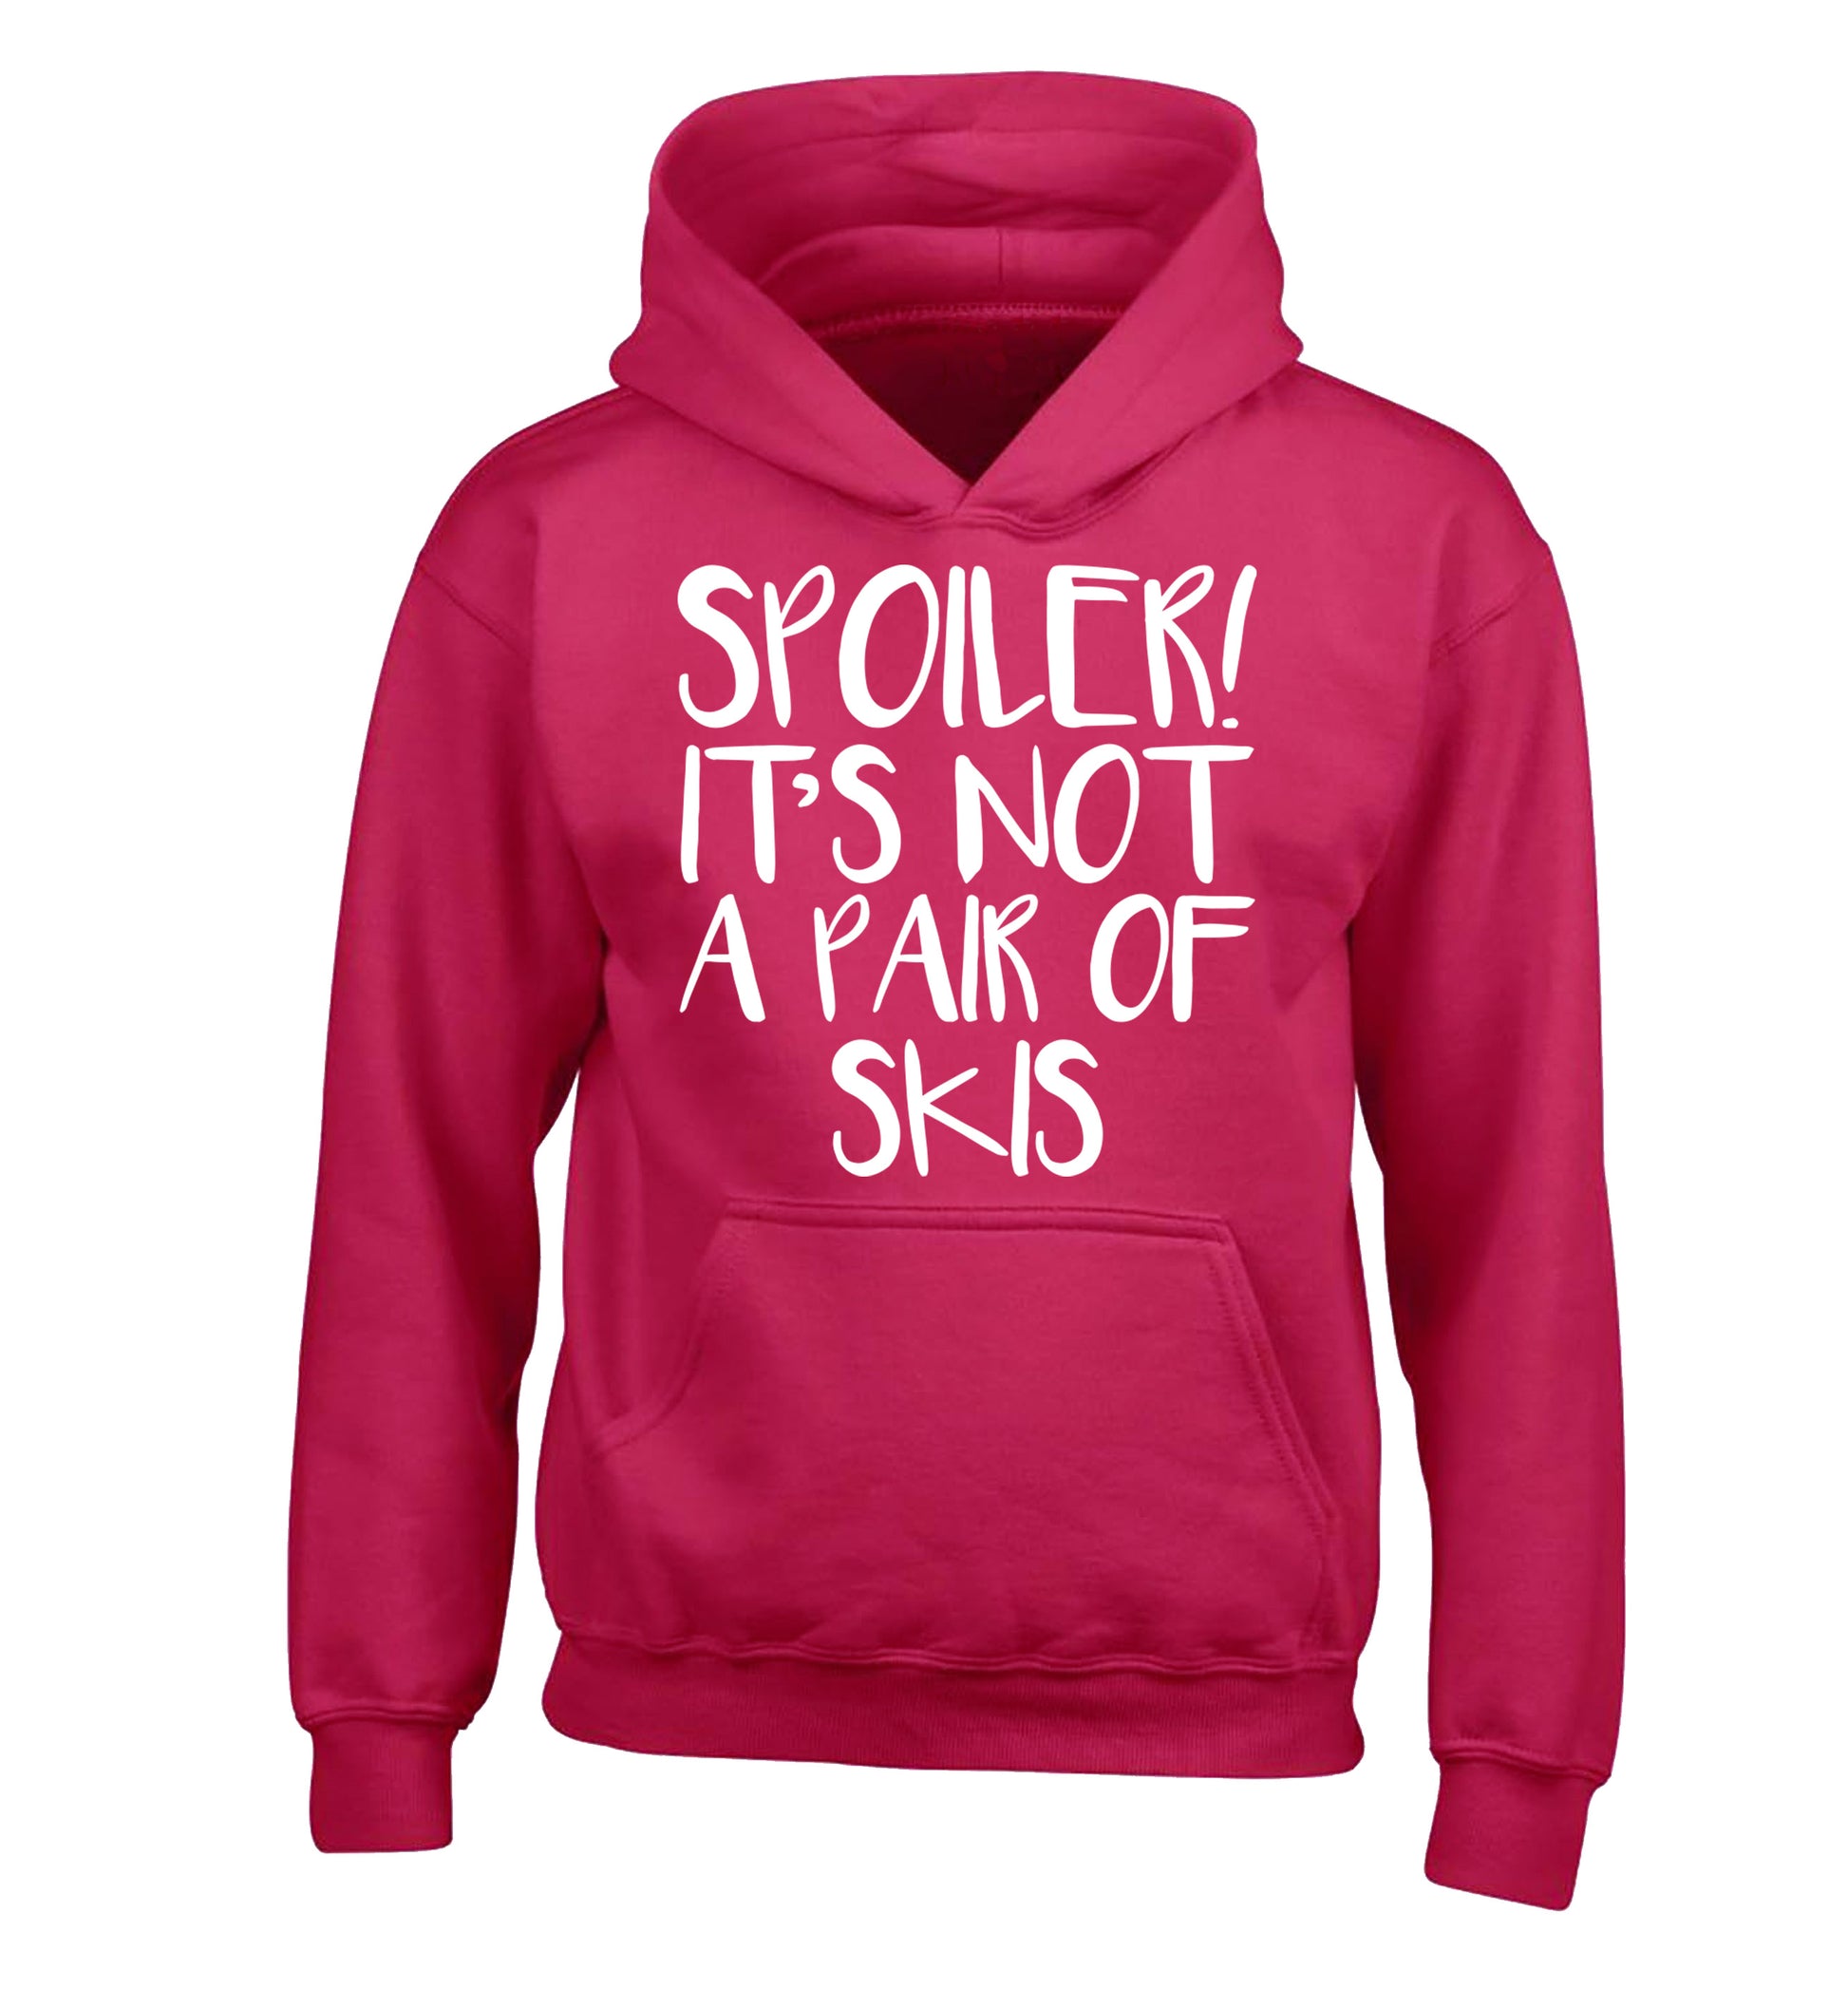 Spoiler it's not a pair of skis children's pink hoodie 12-13 Years